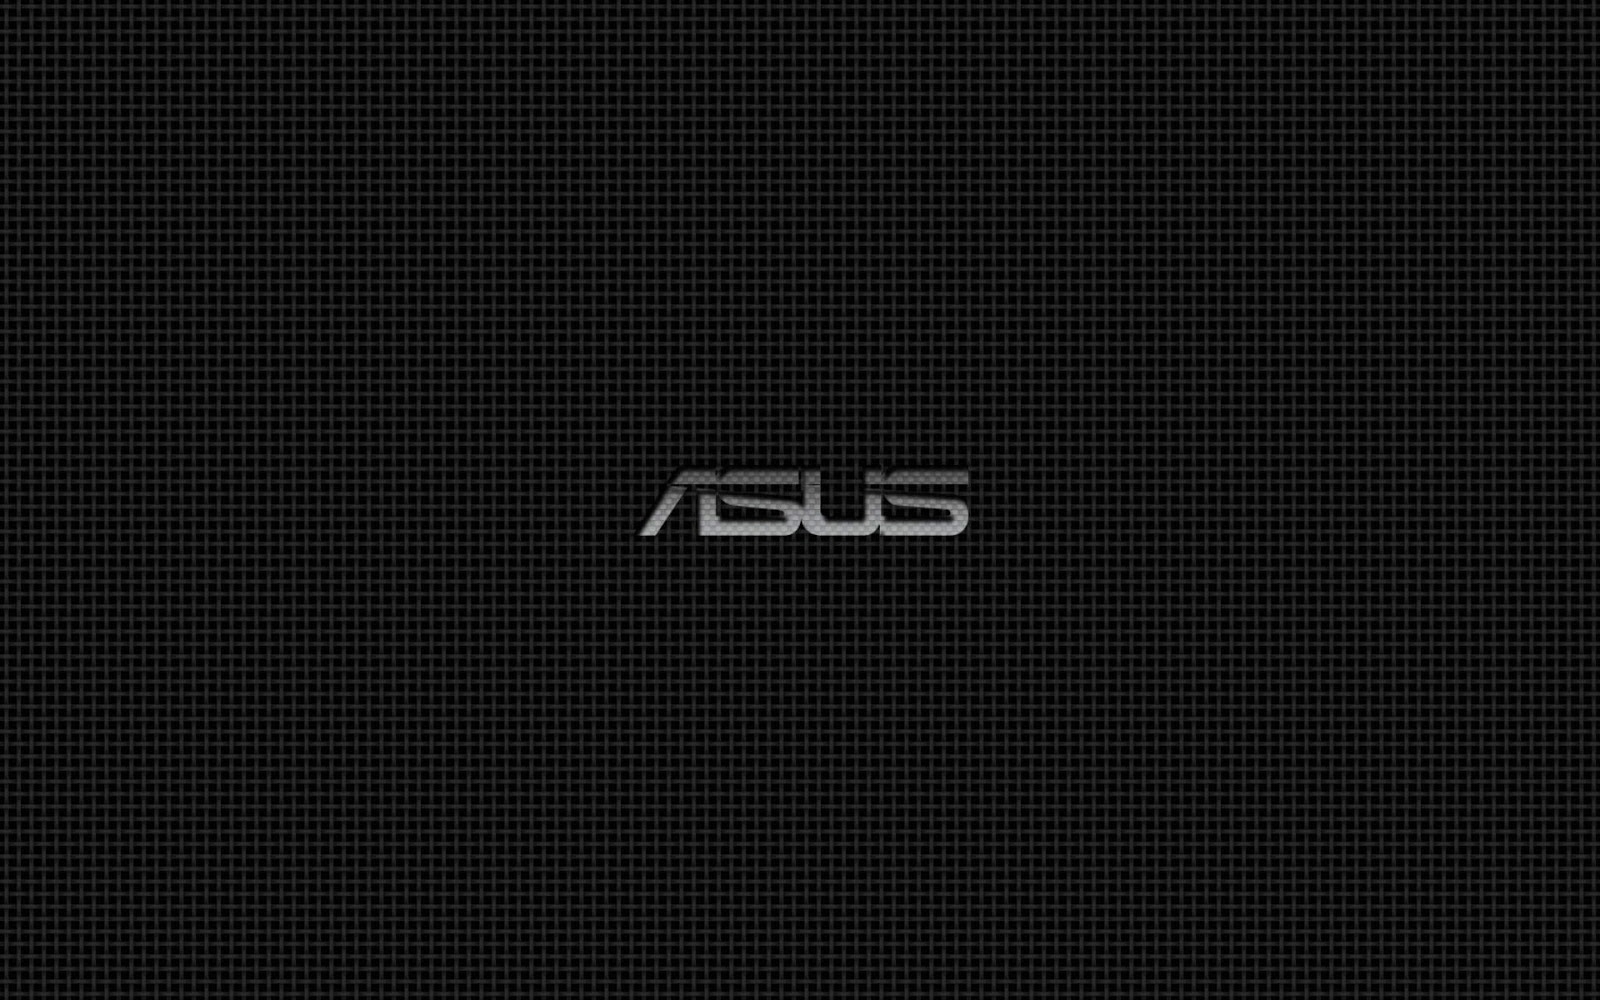 Asus Dark Background HD Wallpaper i03